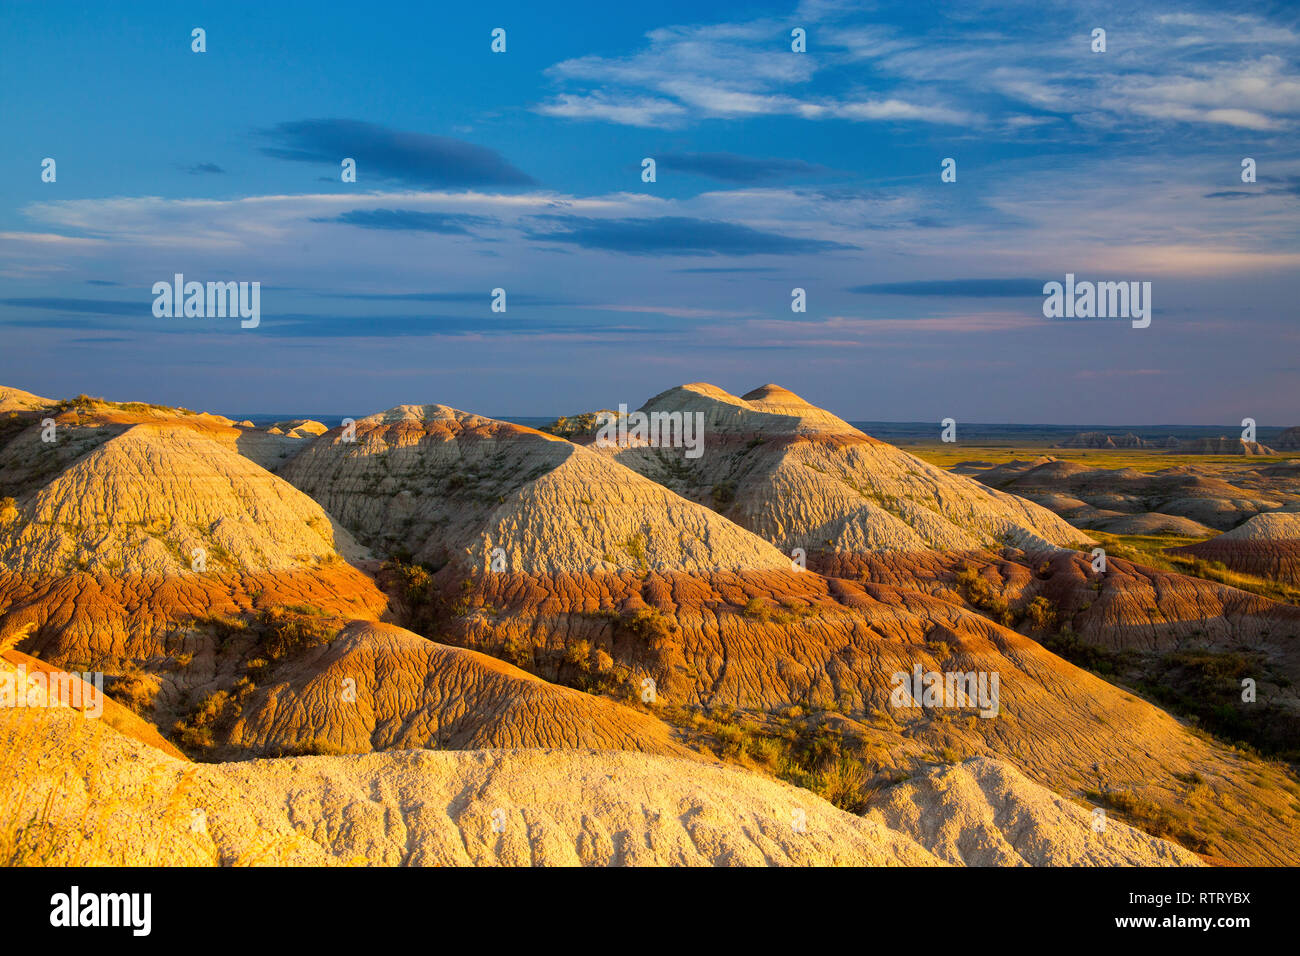 Erodieren Texturen der Badlands National Park South Dakota, Buffalo Gap Grasland Stockfoto